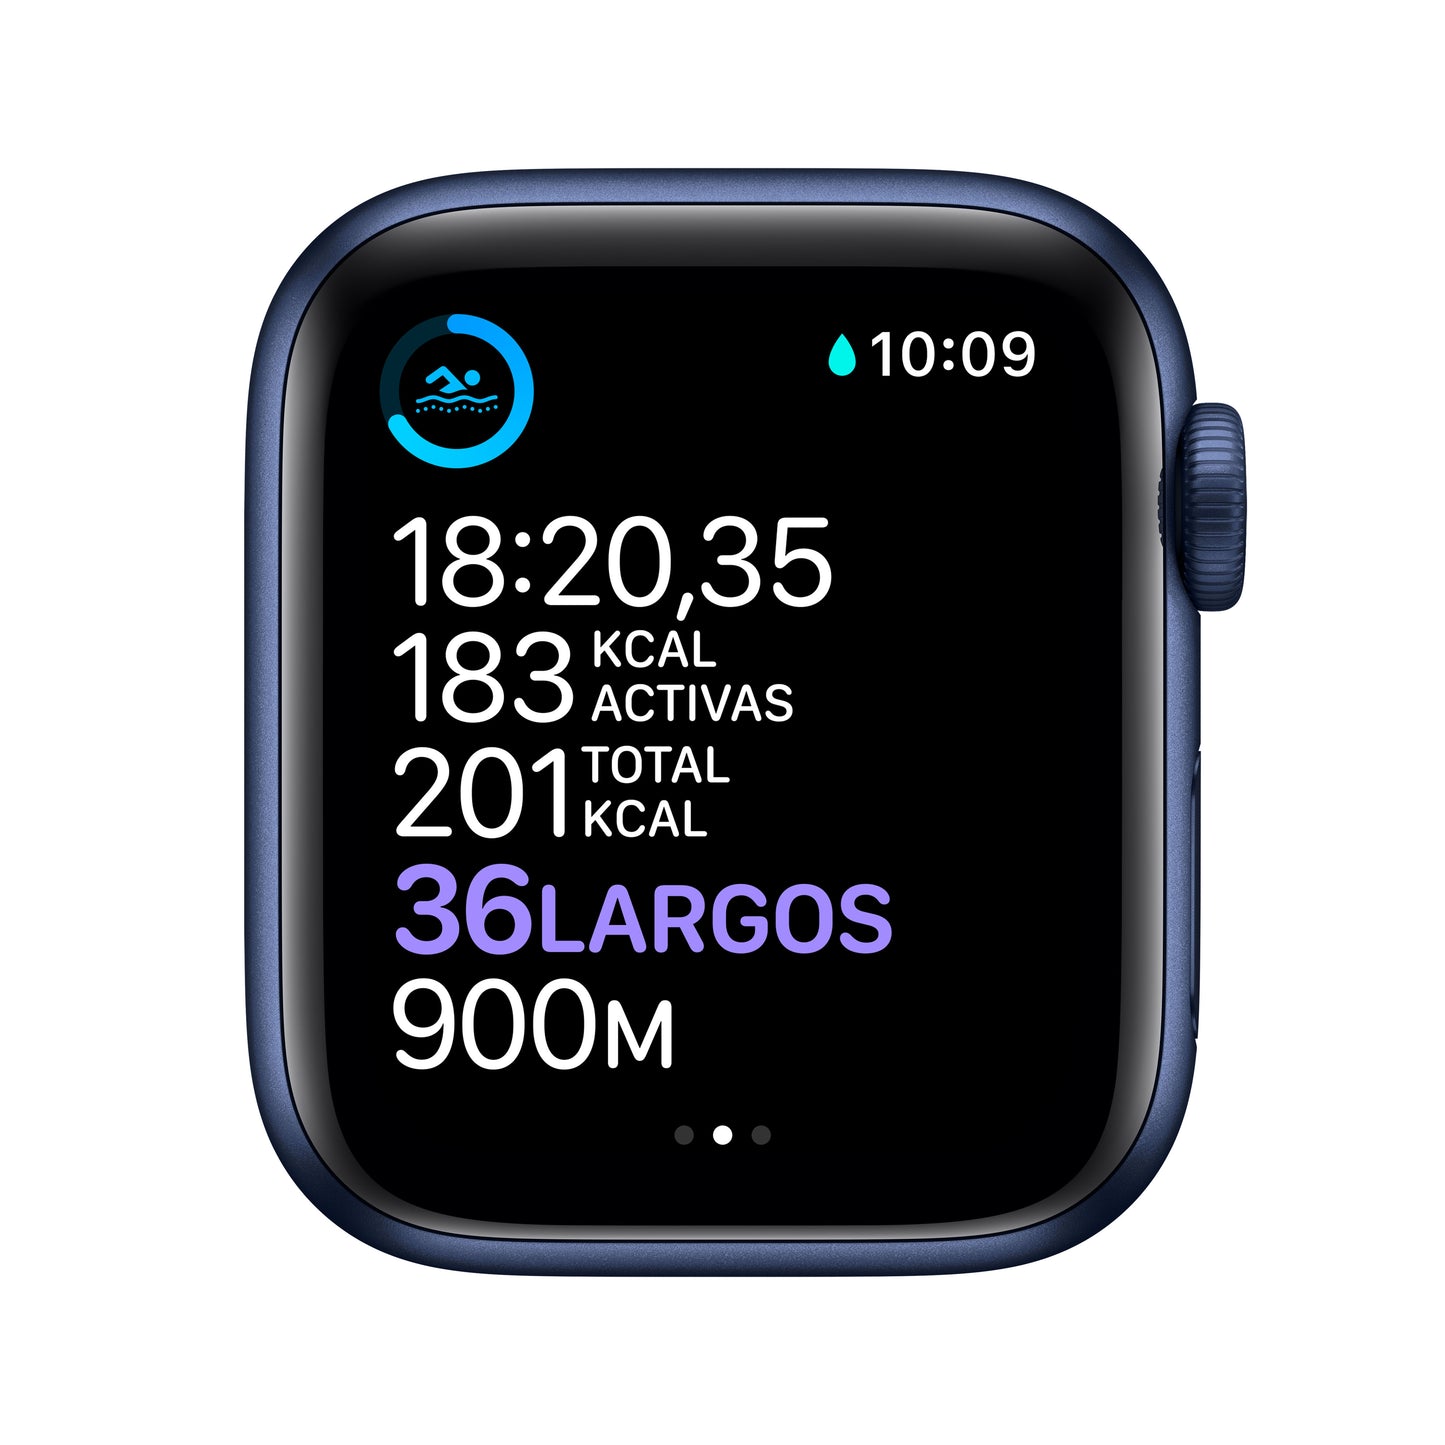 Apple Watch Series 6 (GPS) - Caja de aluminio en azul de 40 mm - Correa deportiva azul marino intenso - Talla única